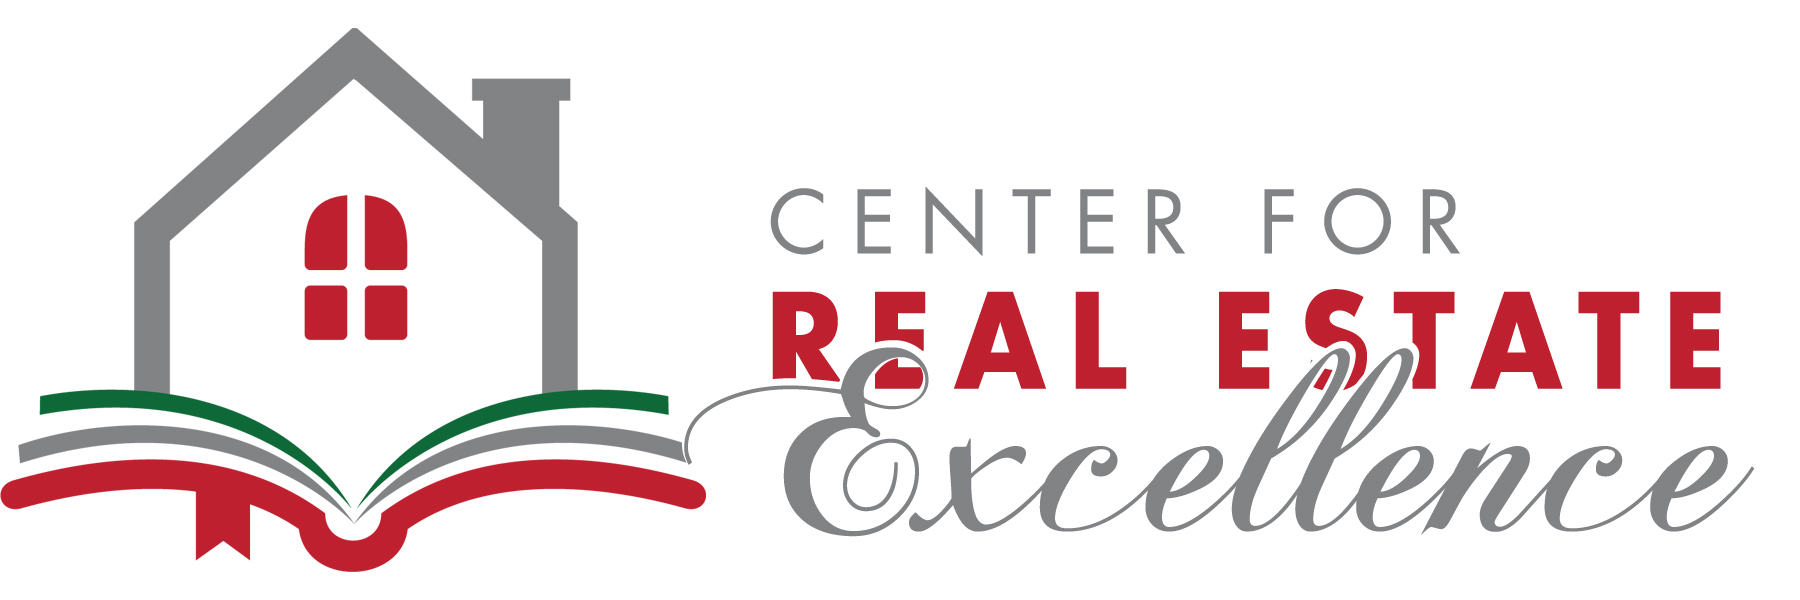 Center for real estate excellence logo